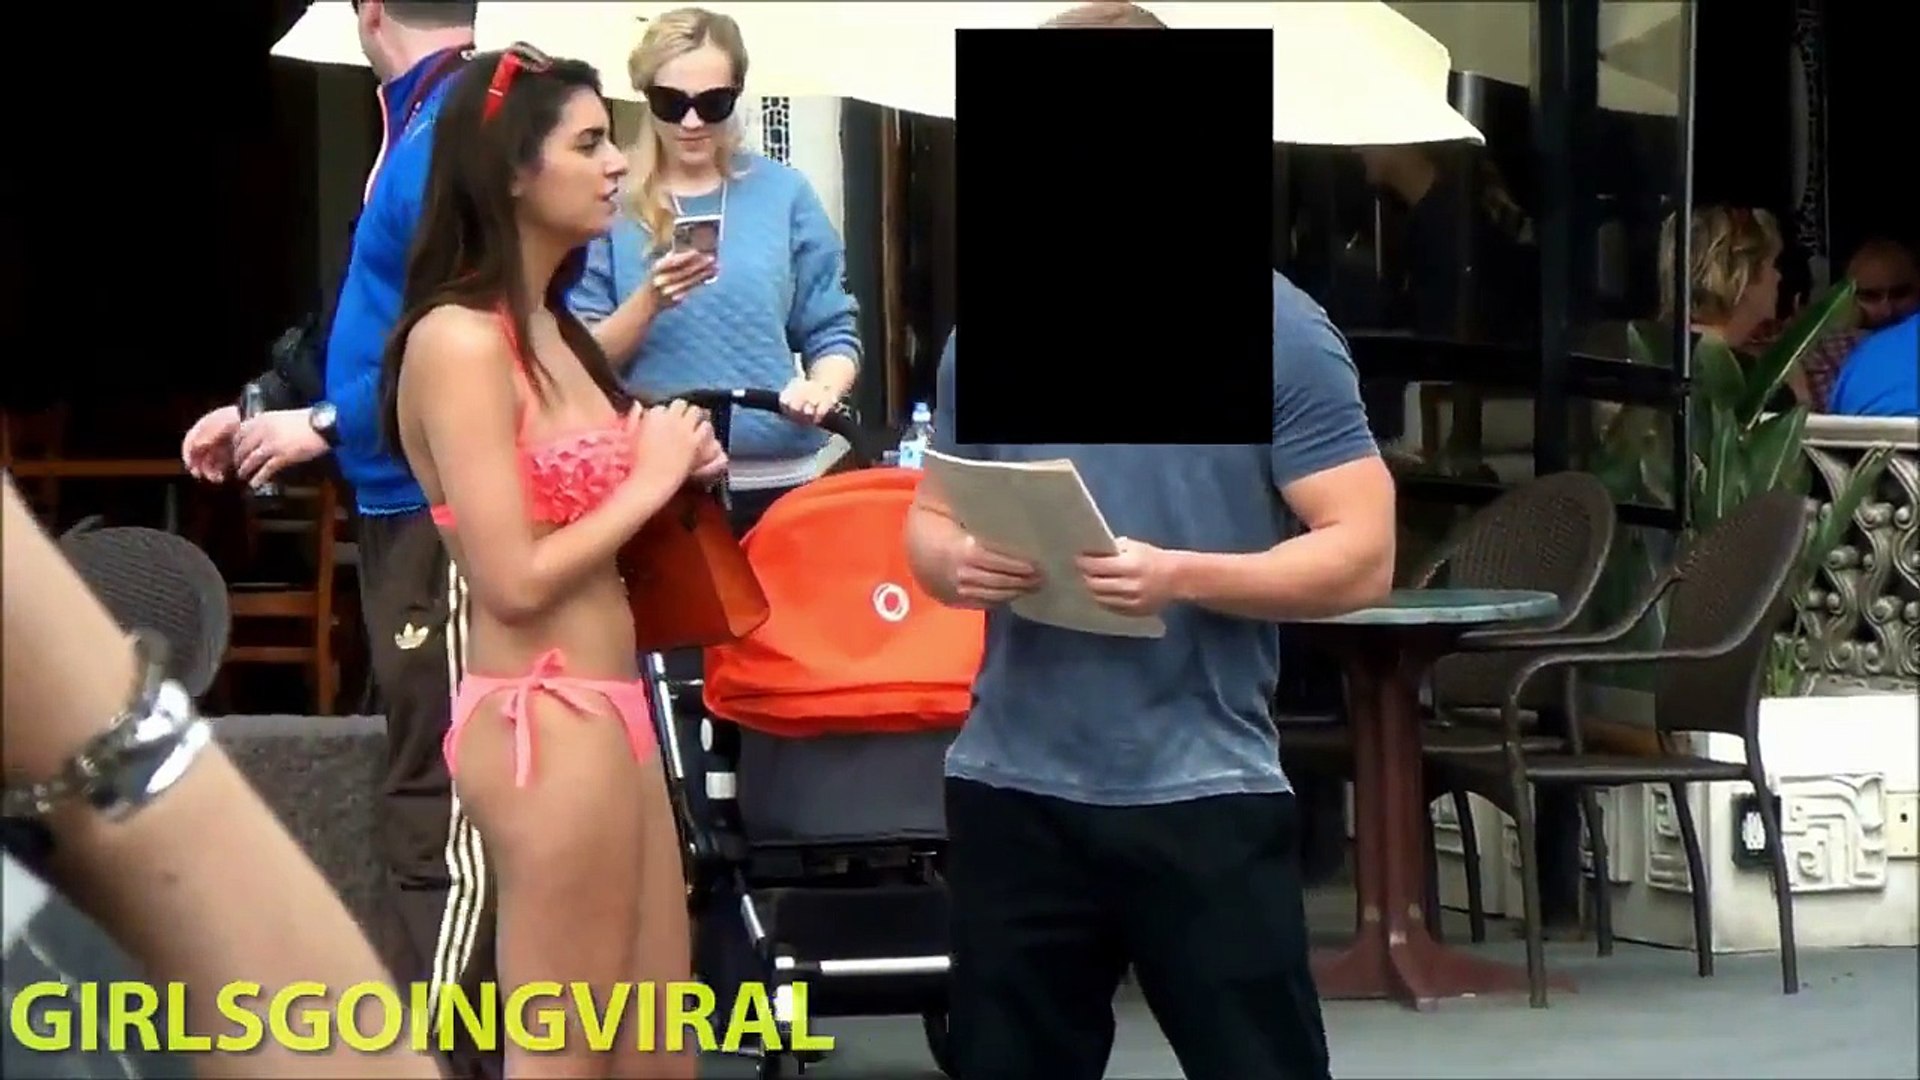 Nerdy Girl vs Hot Girl PICK UP ( Social Experiment ) - Funny Pranks 2015 -  video Dailymotion